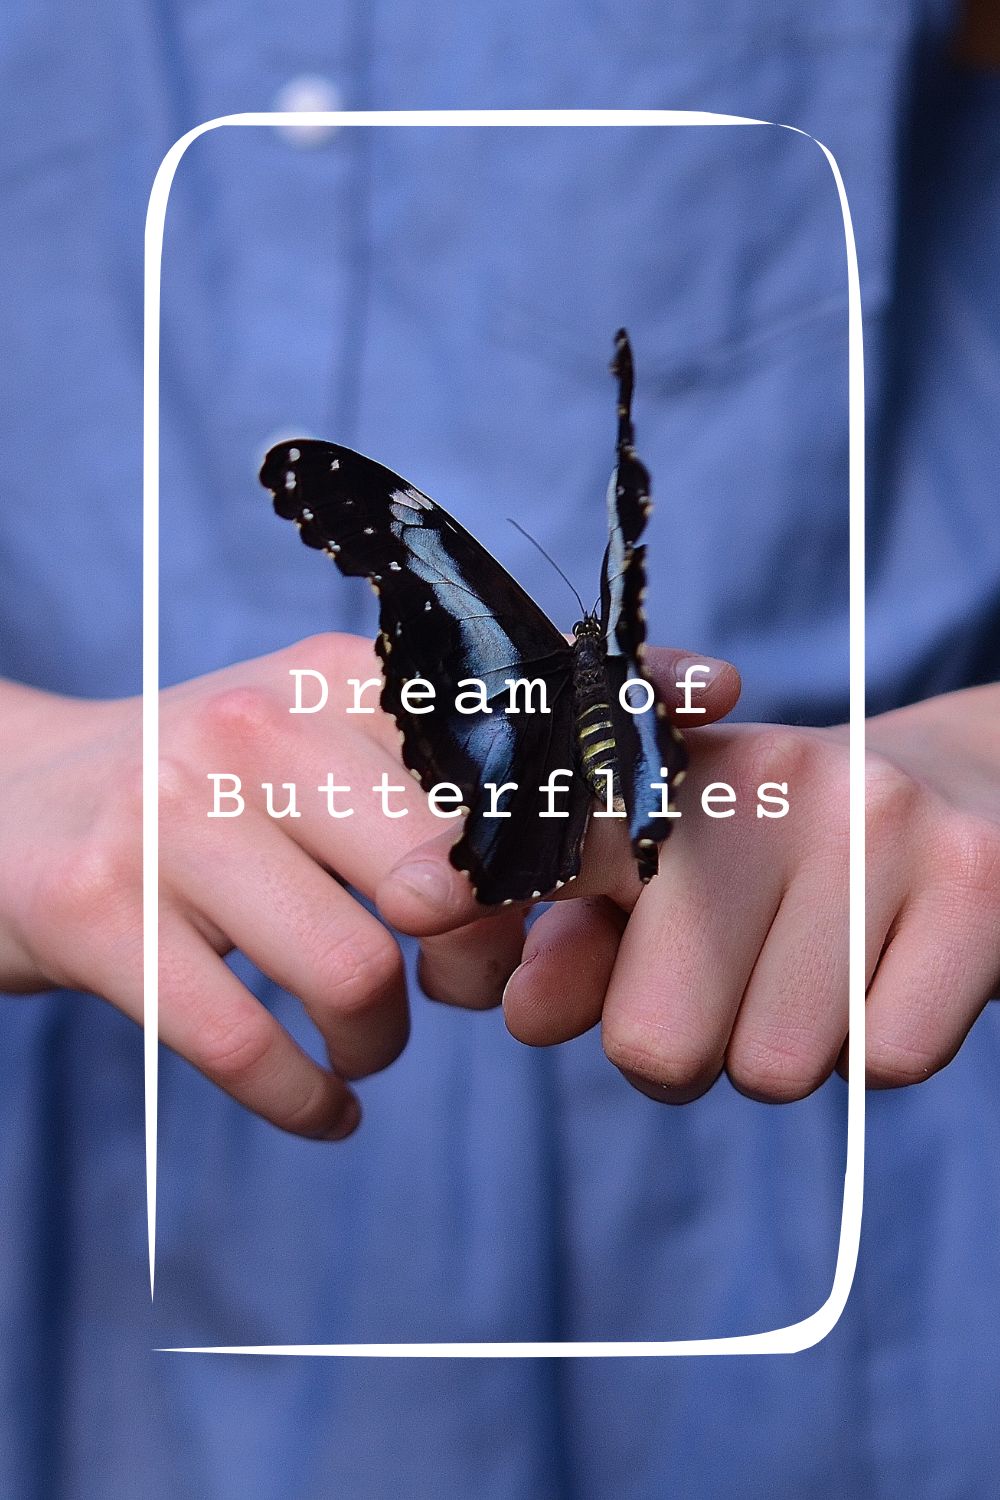 16 Dream of Butterflies Meanings4